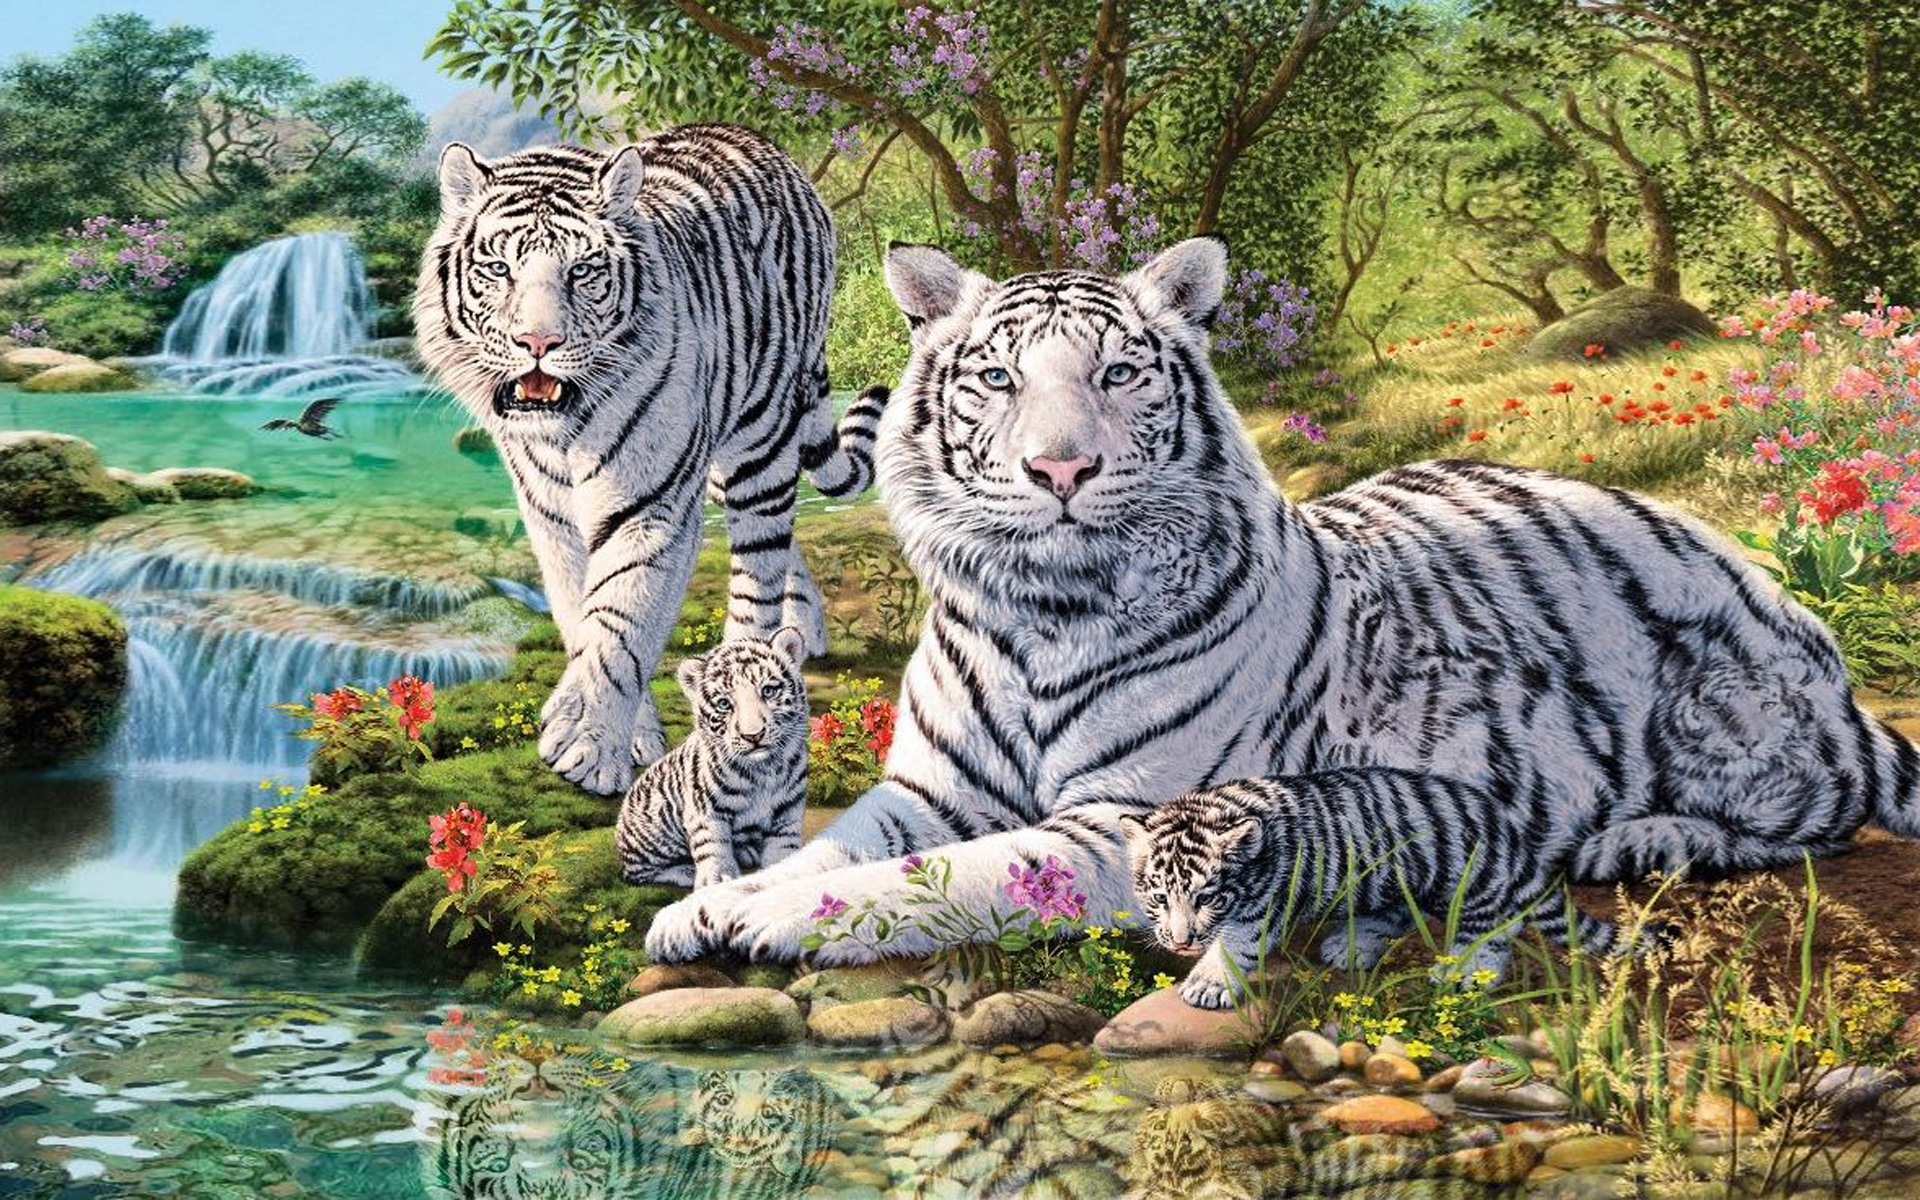 385487 descargar imagen animales, tigre blanco, tigre, cascada, gatos: fondos de pantalla y protectores de pantalla gratis